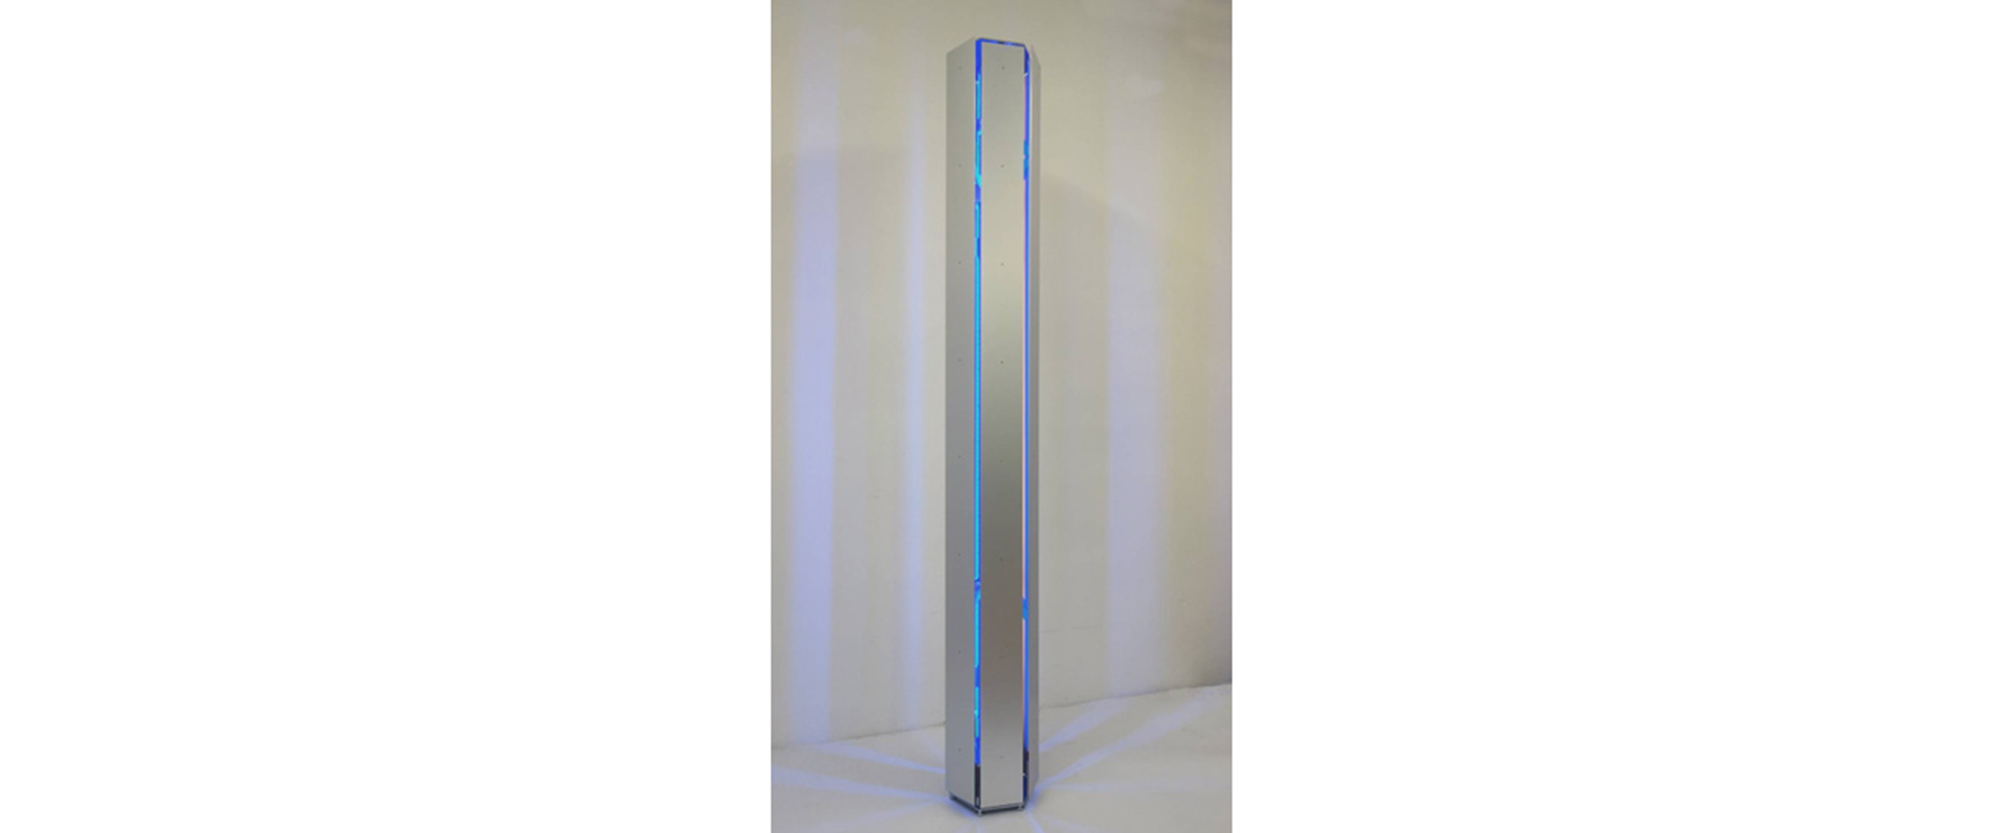 "I 2019", Aluminium, LED –System Blauentladung; Farbige PVC-Folien mit Neonkante, 1 E Motor 3 U/min, 20 bis 22 x 20 bis 22 x 193 cm